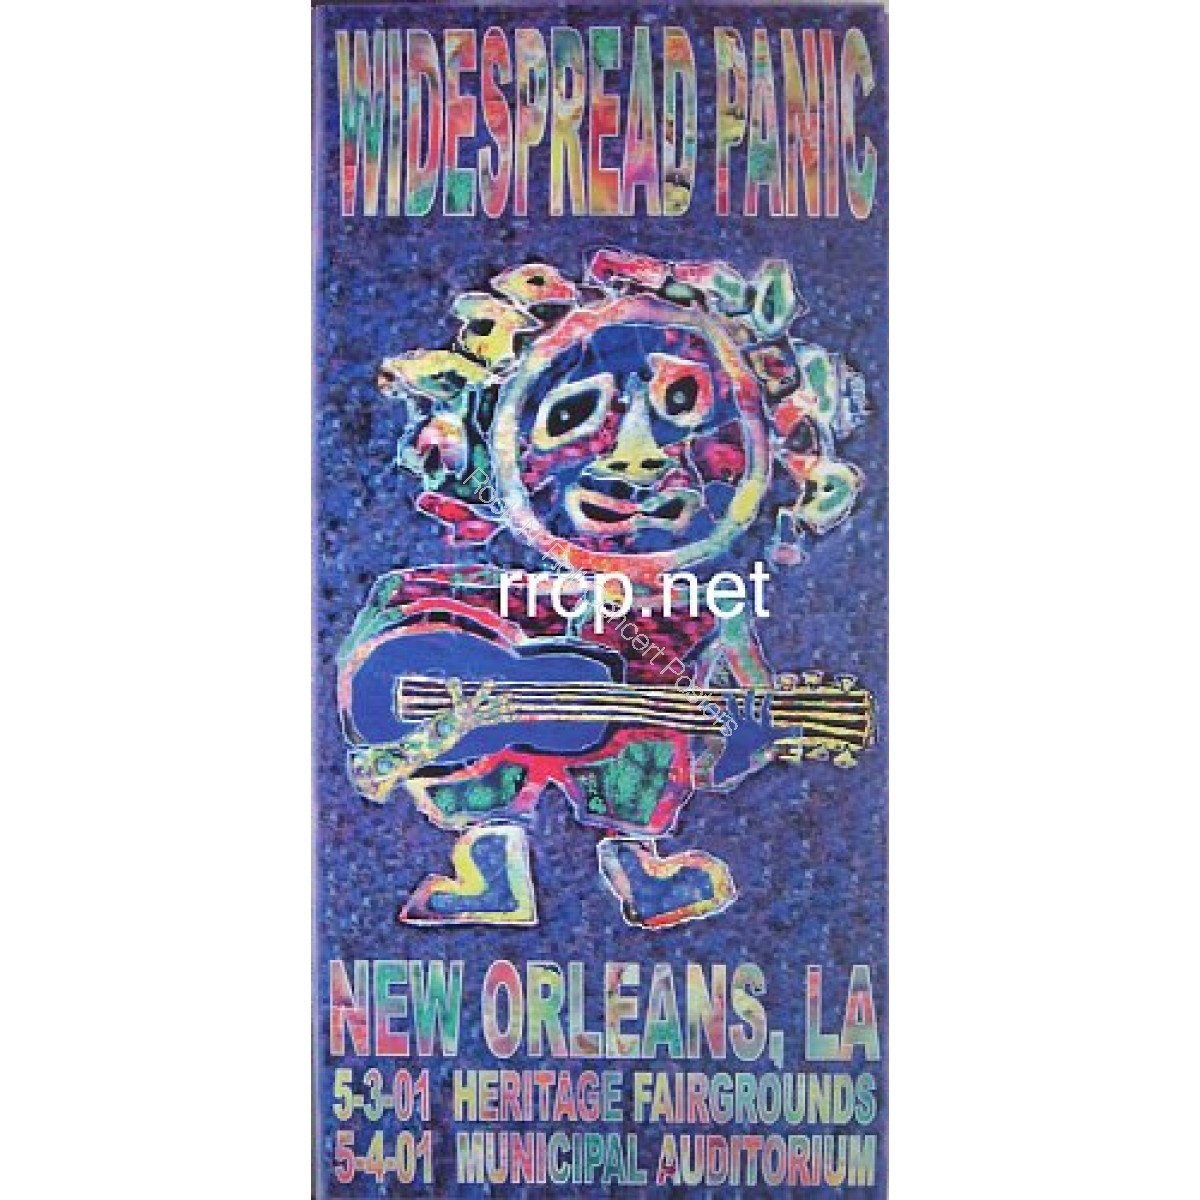 Widespread Panic Jazz Festival & Municiple Auditorium New Orleans 5/3-4/01 Official Poster